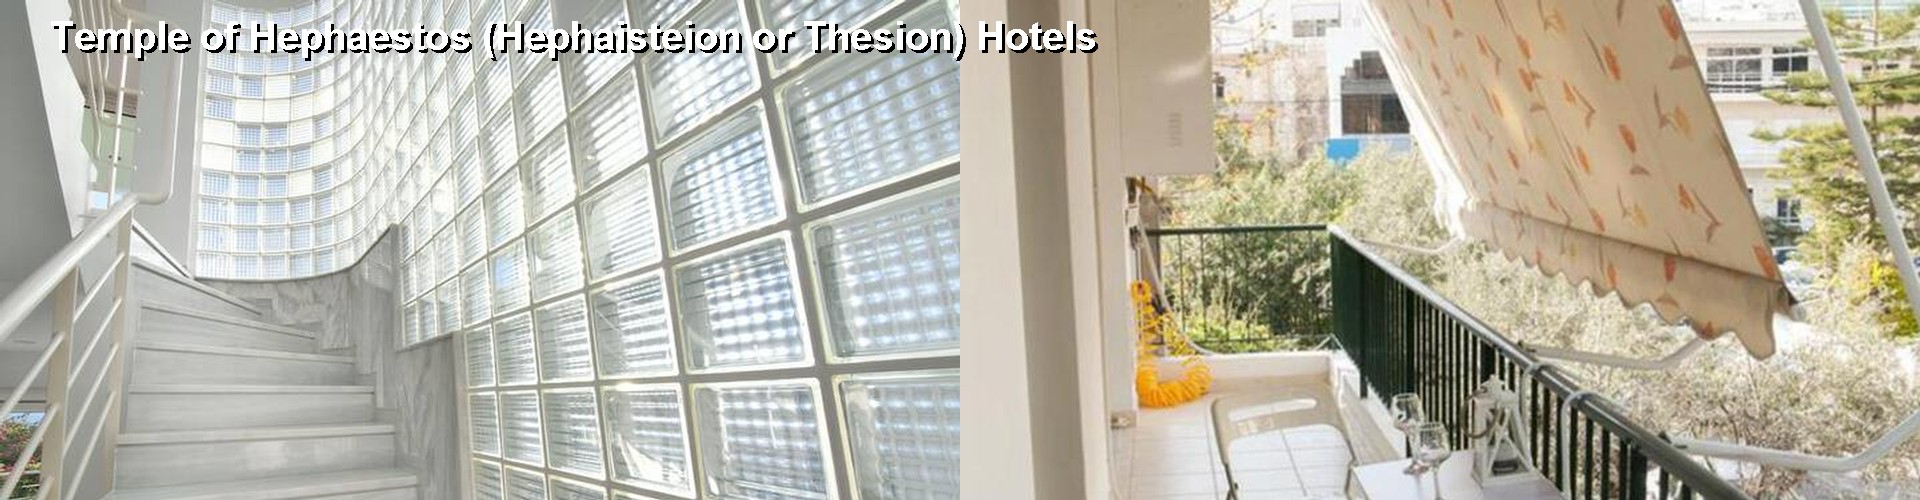 5 Best Hotels near Temple of Hephaestos (Hephaisteion or Thesion)